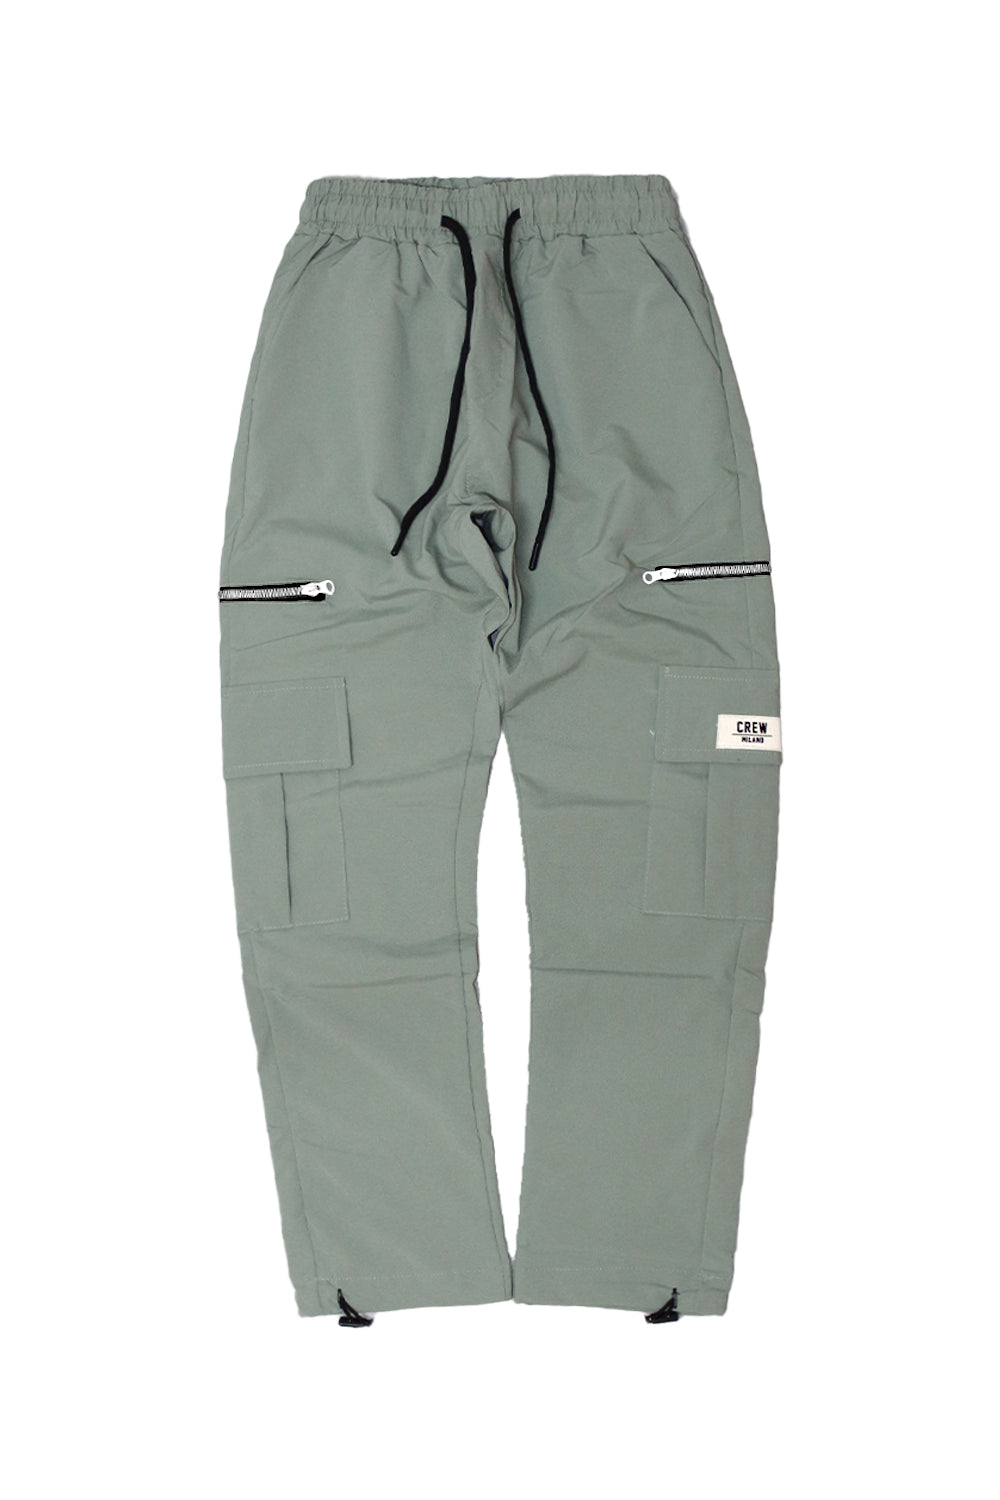 CREW Mint Green Cargo Pants Zipper Lace